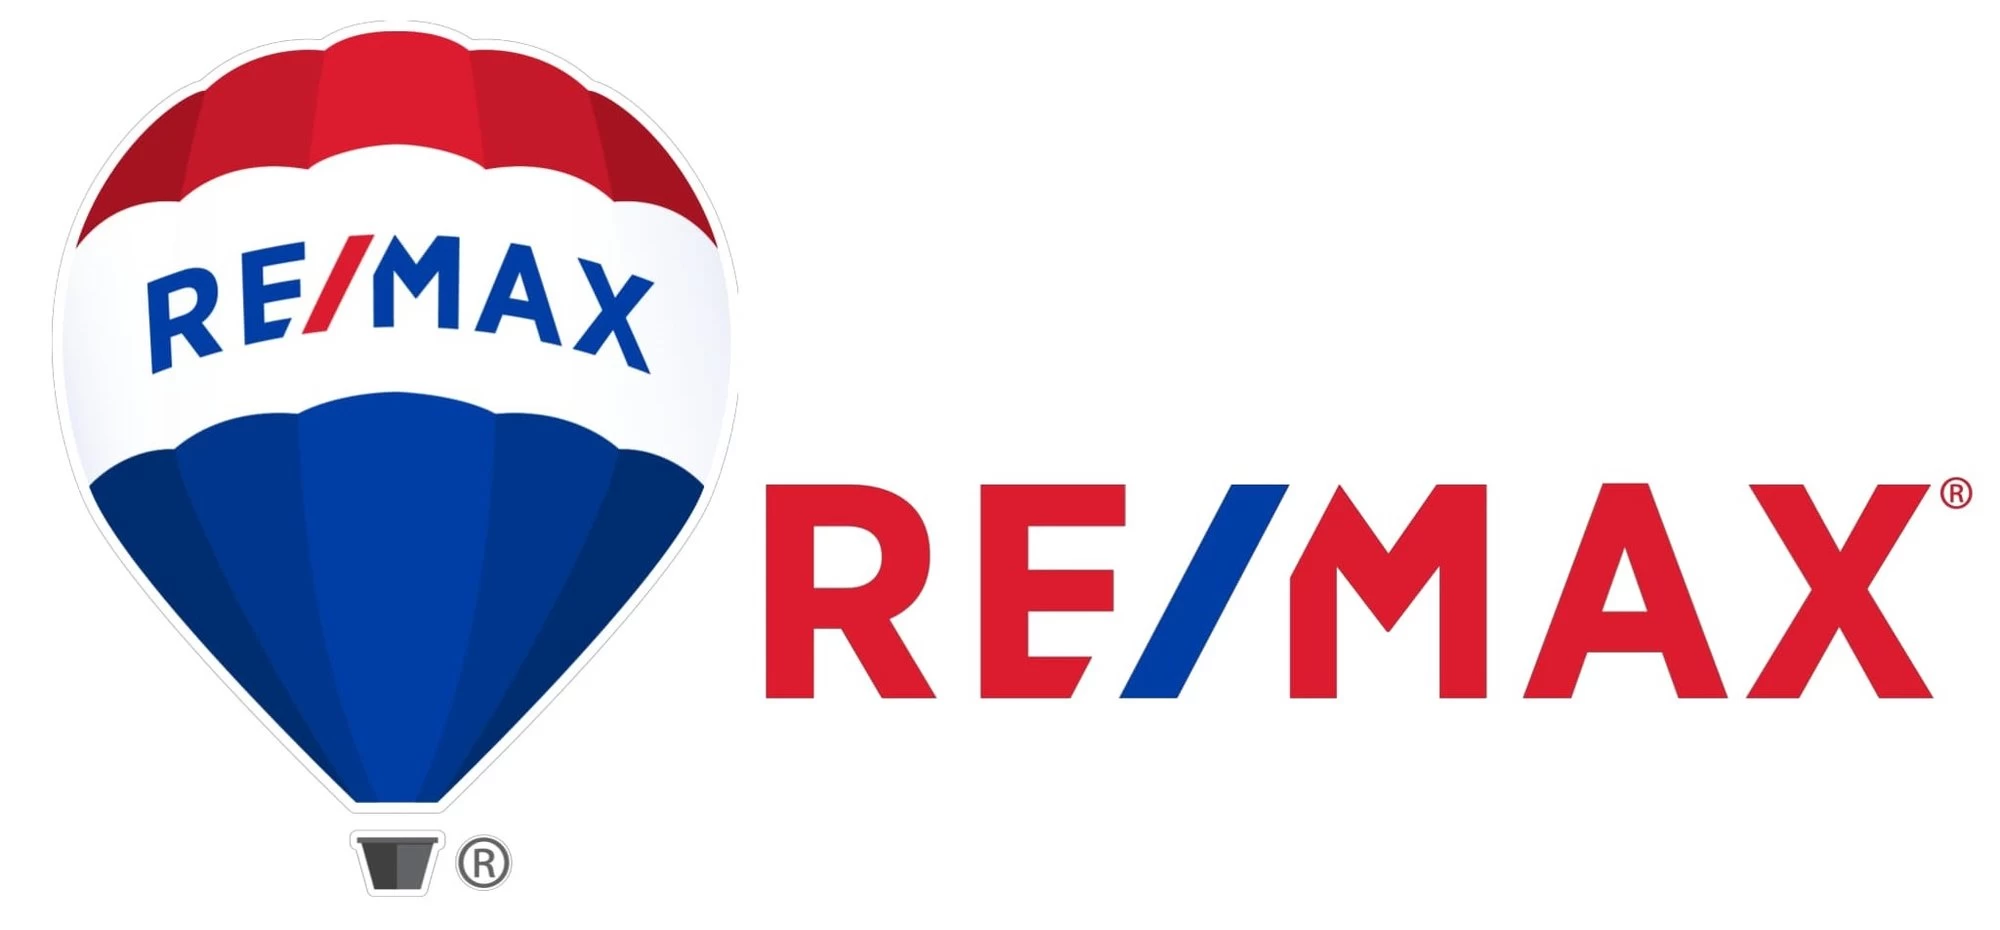 REMAX Franchise Logo